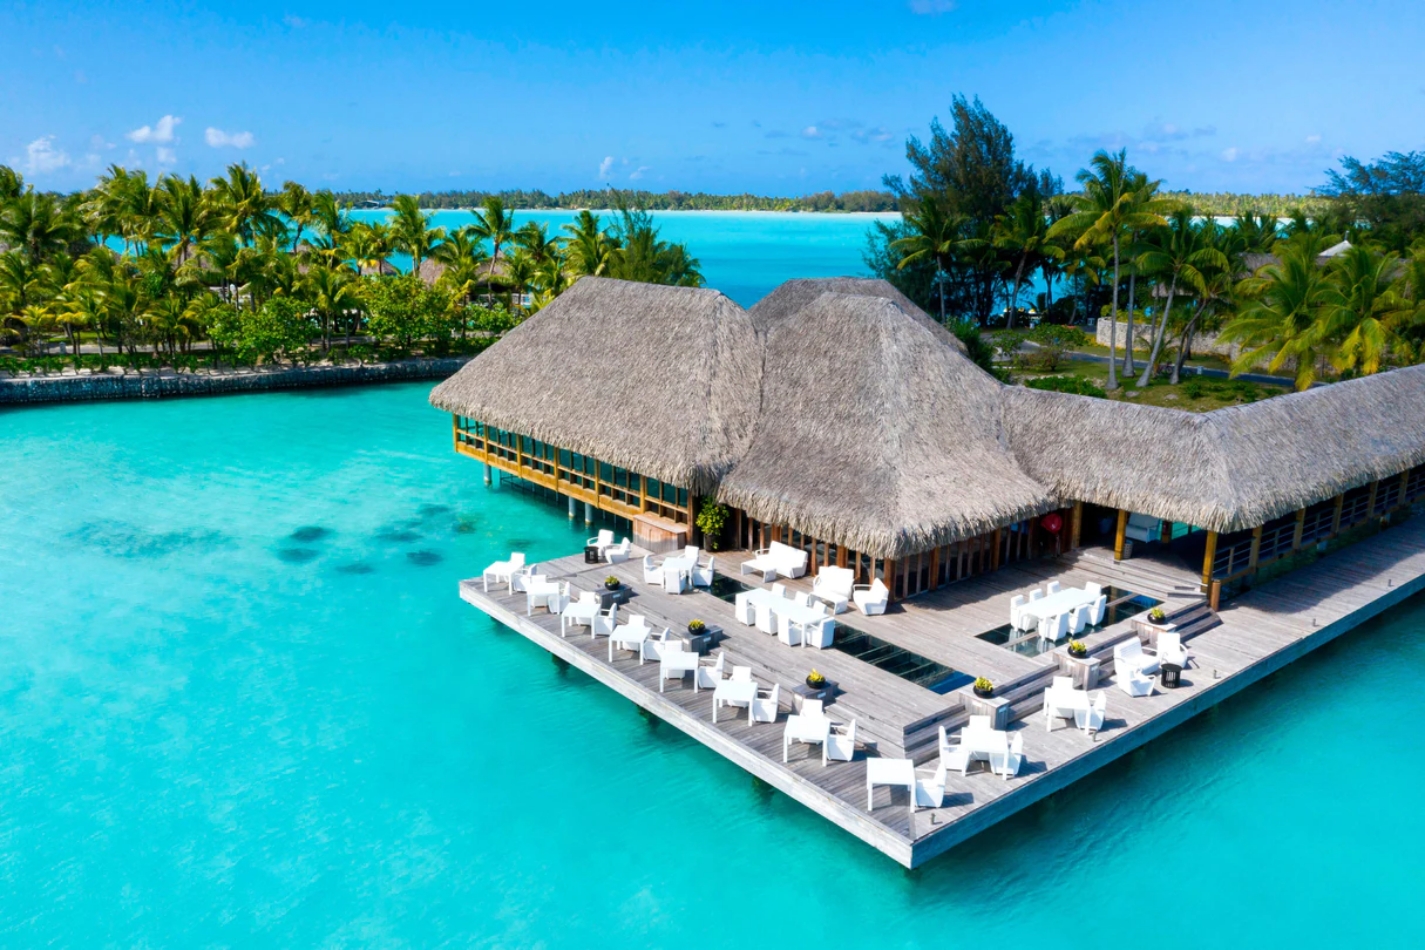 The St. Regis Bora Bora Resort Lagoon Restaurant by Jean-Georges